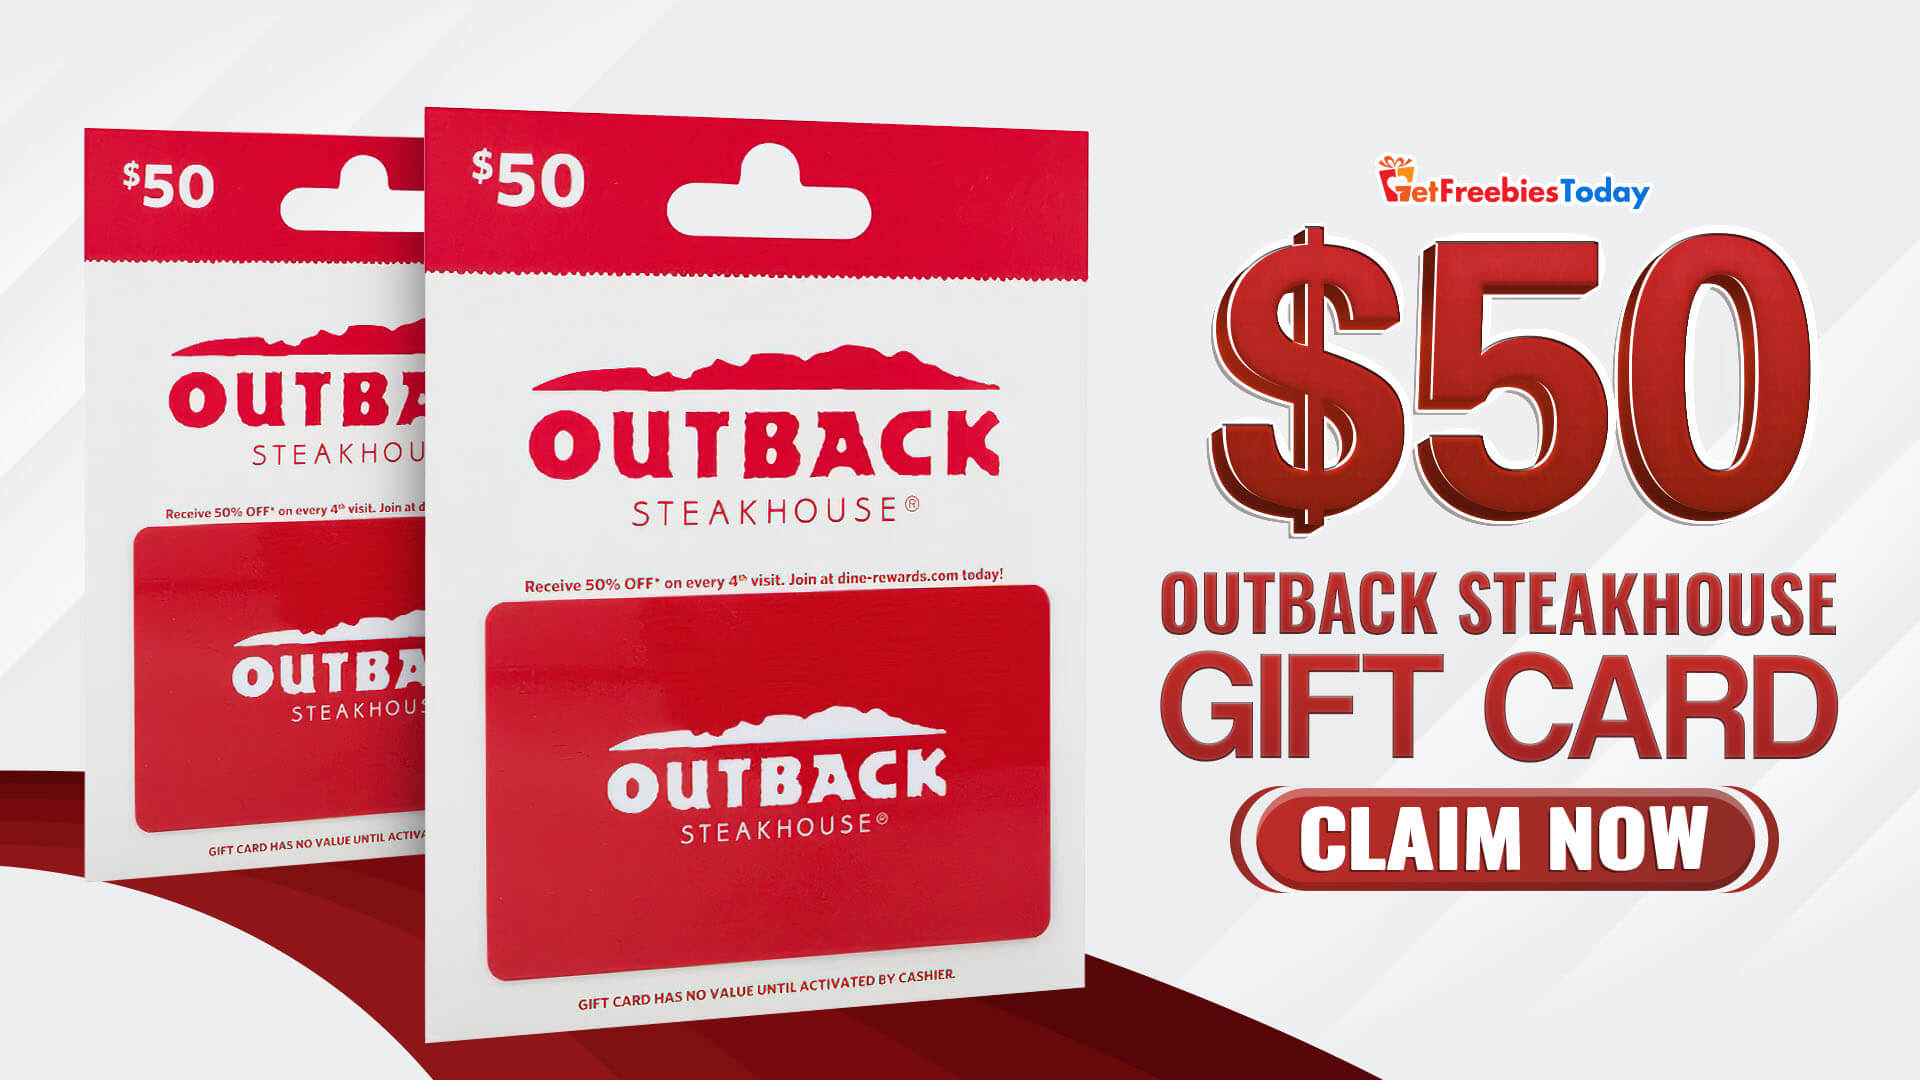 Free $50 Outback Steakhouse Gift Card | GetFreebiesToday.com